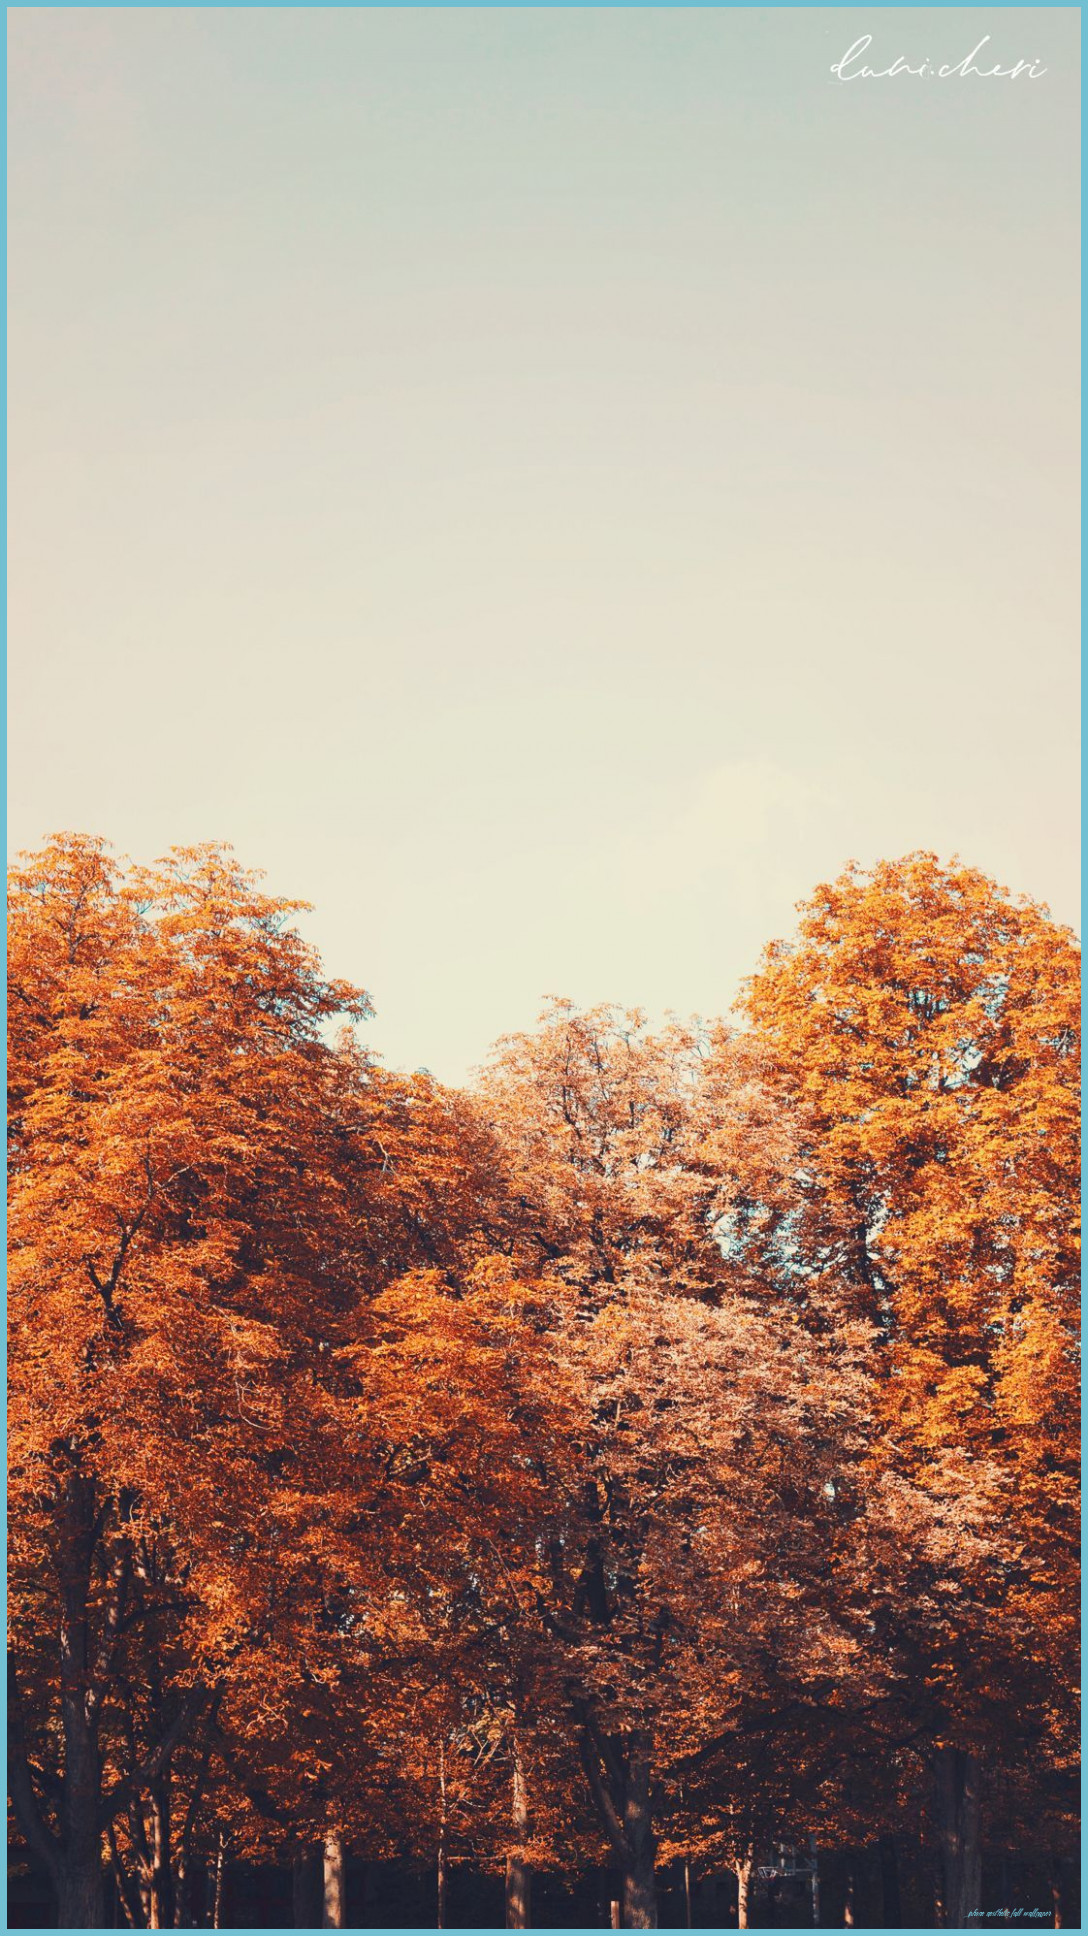 Free Download: Autumn Wallpaper ♥ Desktop & Mobile #Autumn Aesthetic Fall Wallpaper